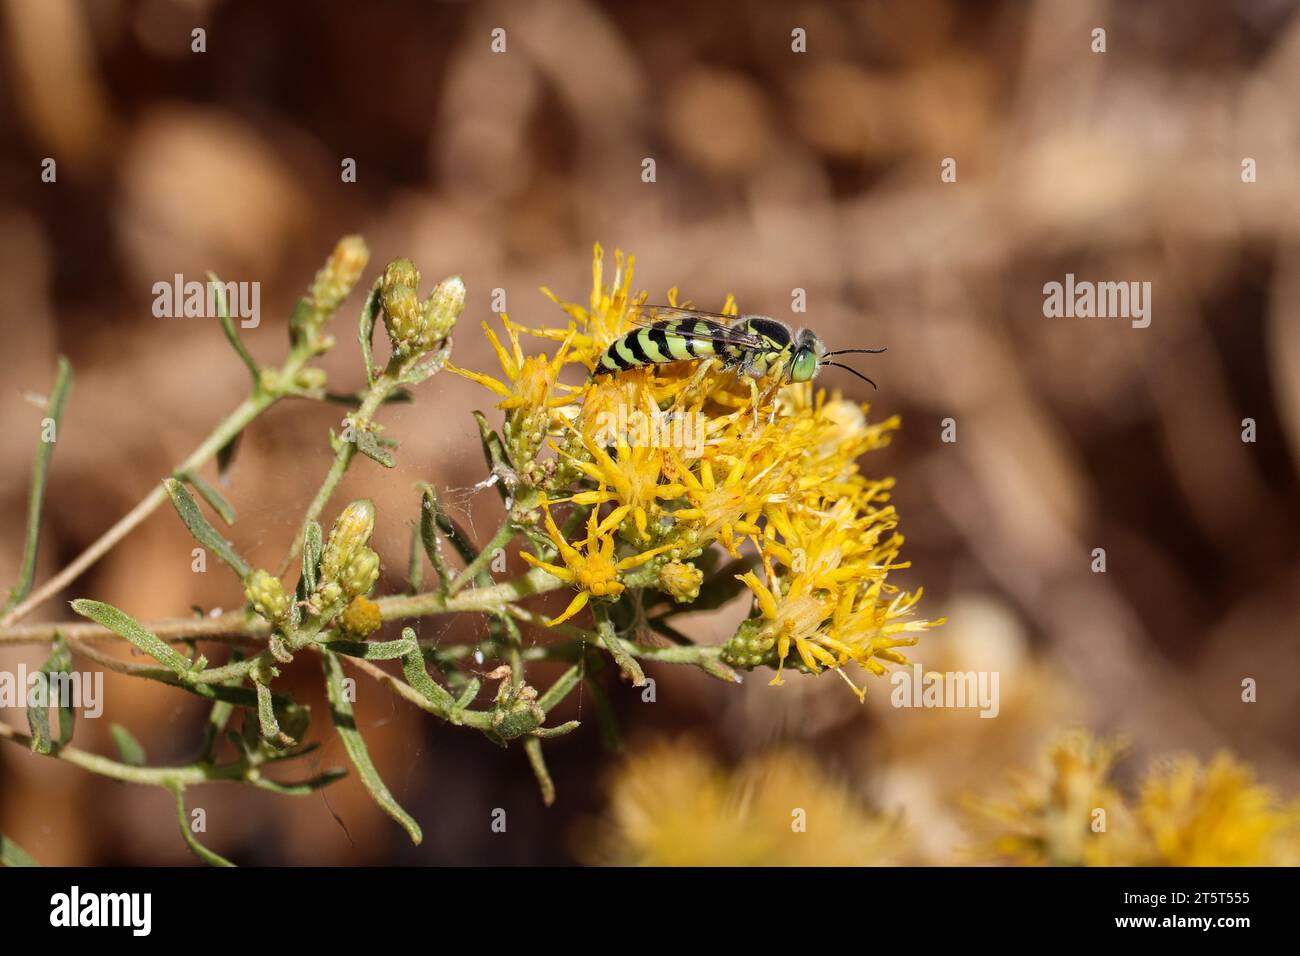 Sand wasp or Bembicini feeding on goldenbush at the Riparian water ranch in Arizona. Stock Photo